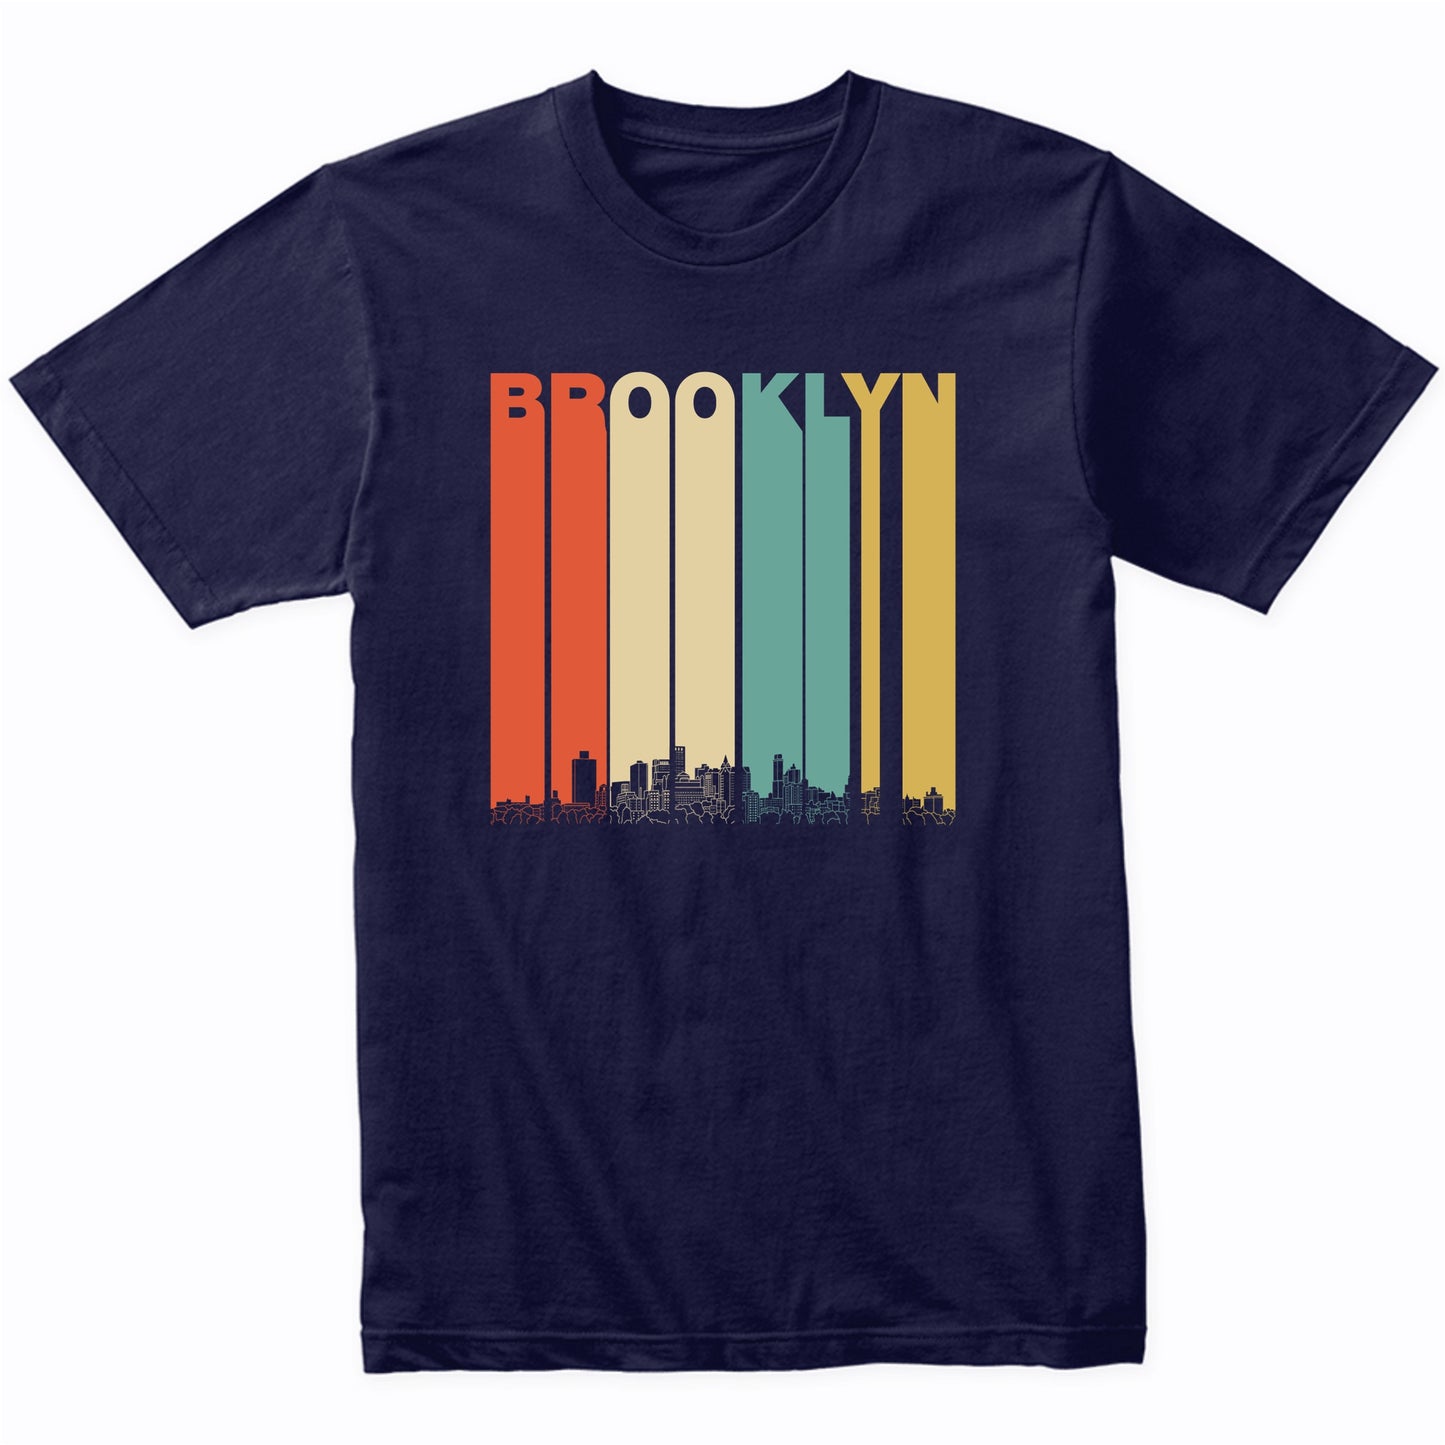 Vintage 1970's Style Brooklyn New York Skyline T-Shirt